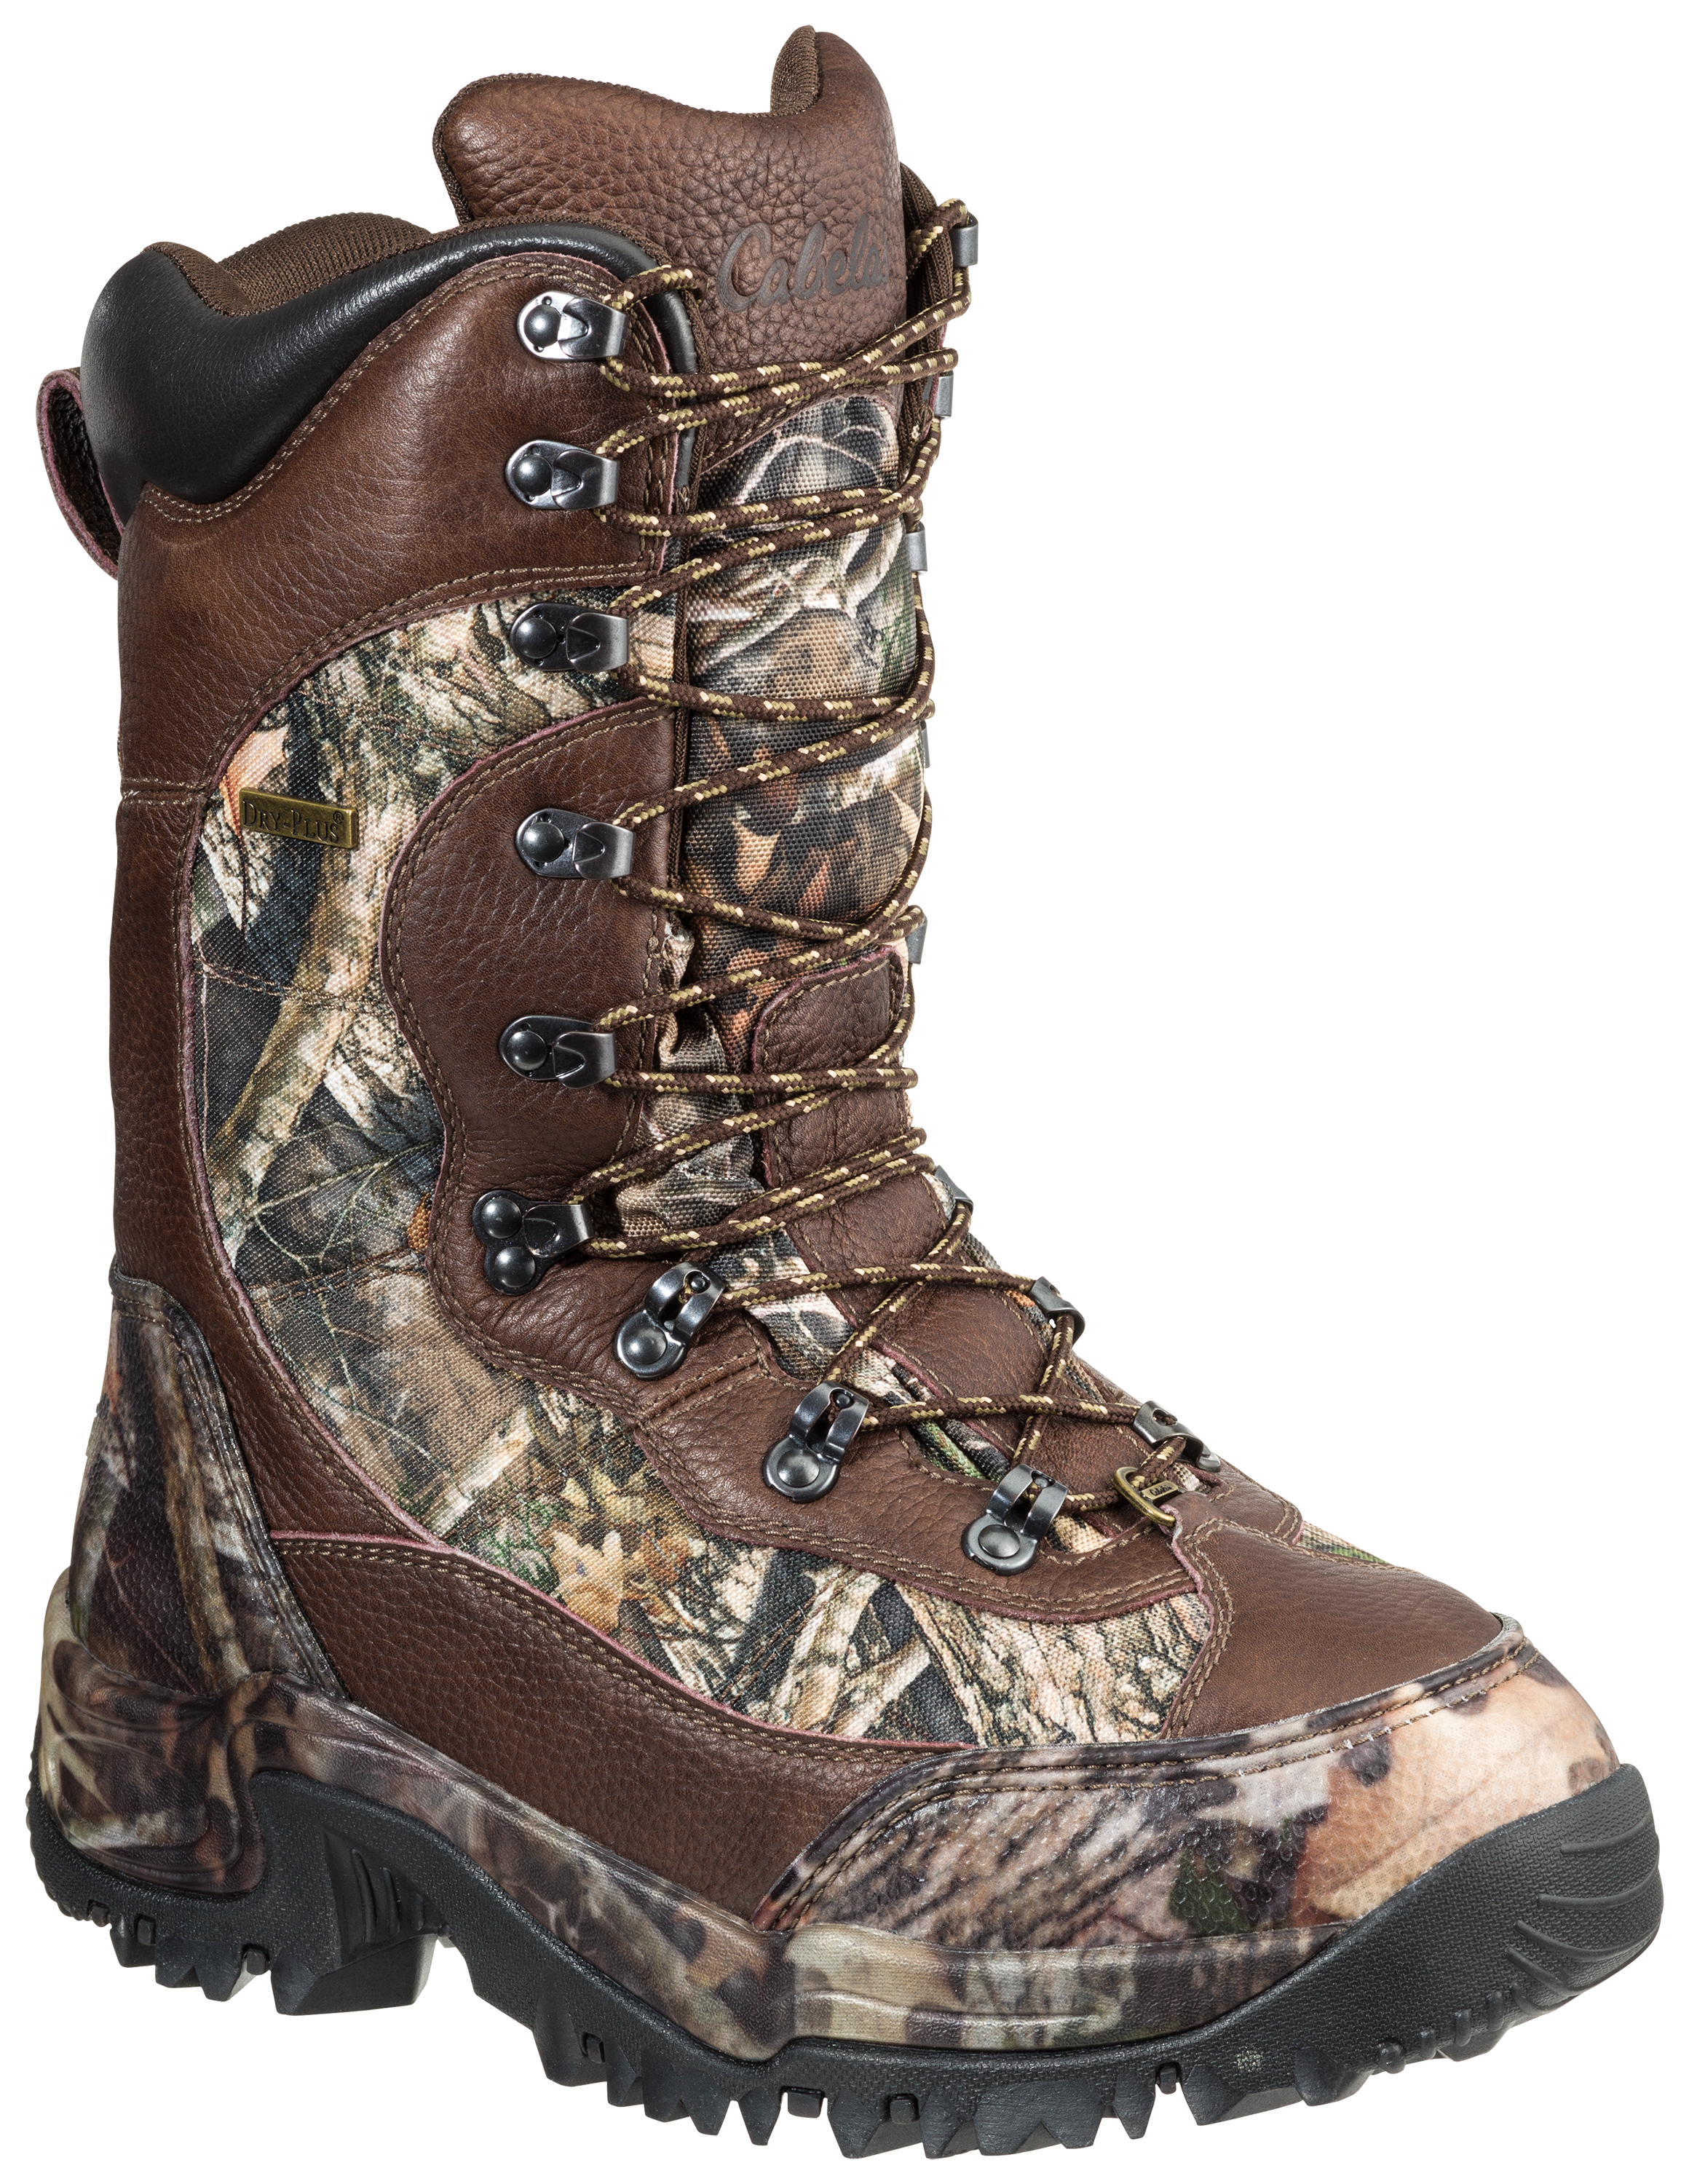 Cabela's Inferno Insulated Waterproof Hunting Boots for Men - Brown/TrueTimber Kanati - 13M